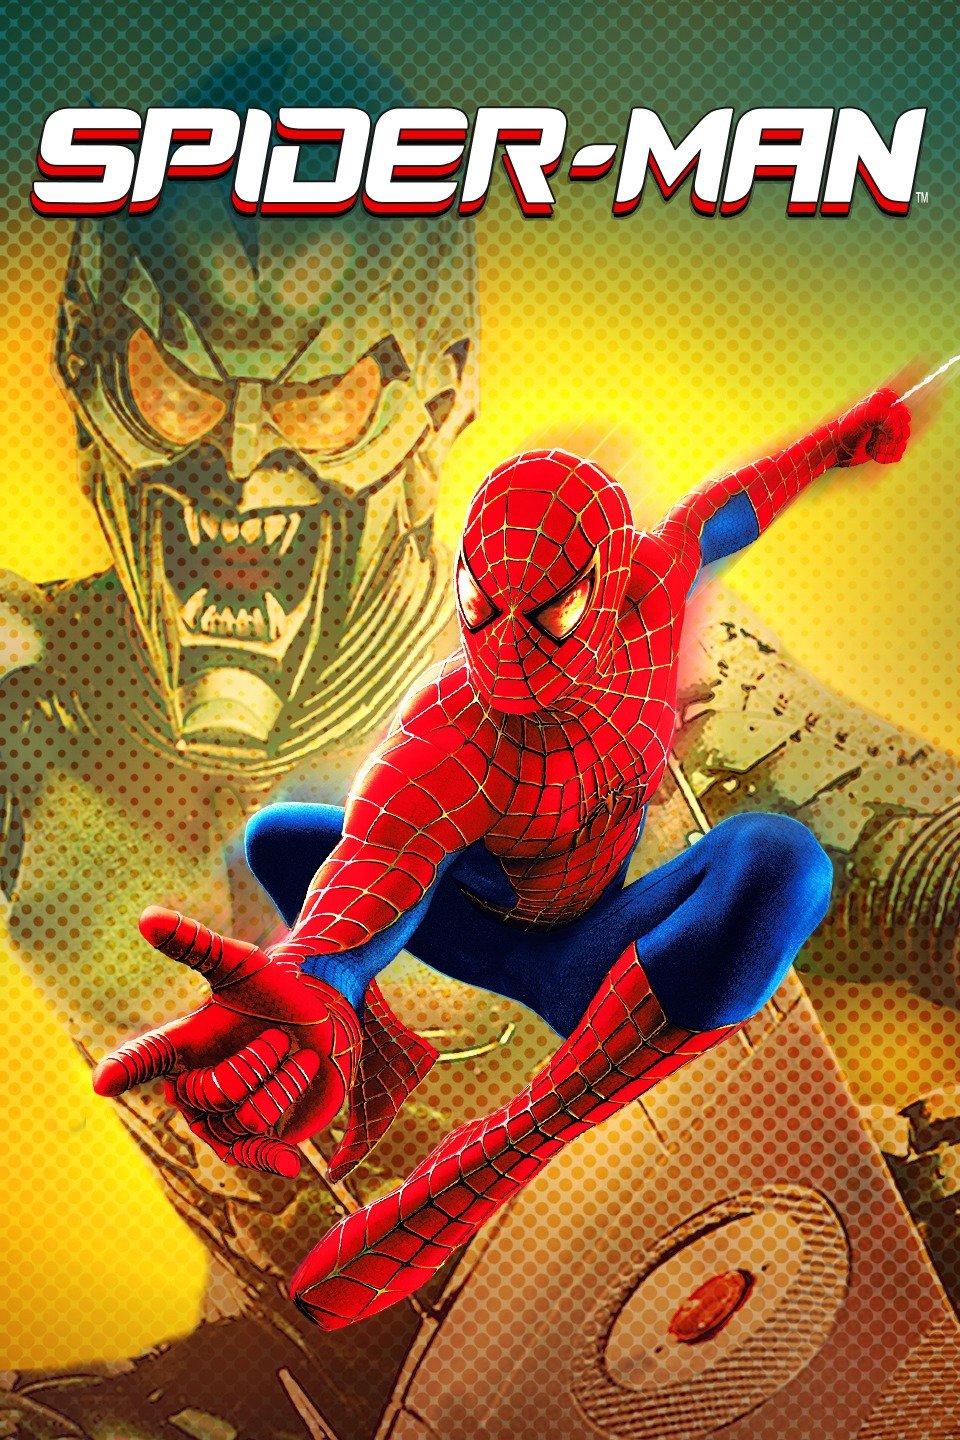 [MINI Super-HQ] Spider-Man (2002) ไอ้แมงมุม [1080p] [พากย์ไทย 5.1 + อังกฤษ DTS] [BluRay.DTS.x264] [บรรยายไทย + อังกฤษ] [ซับไทย + อังกฤษ] [ONE2UP]